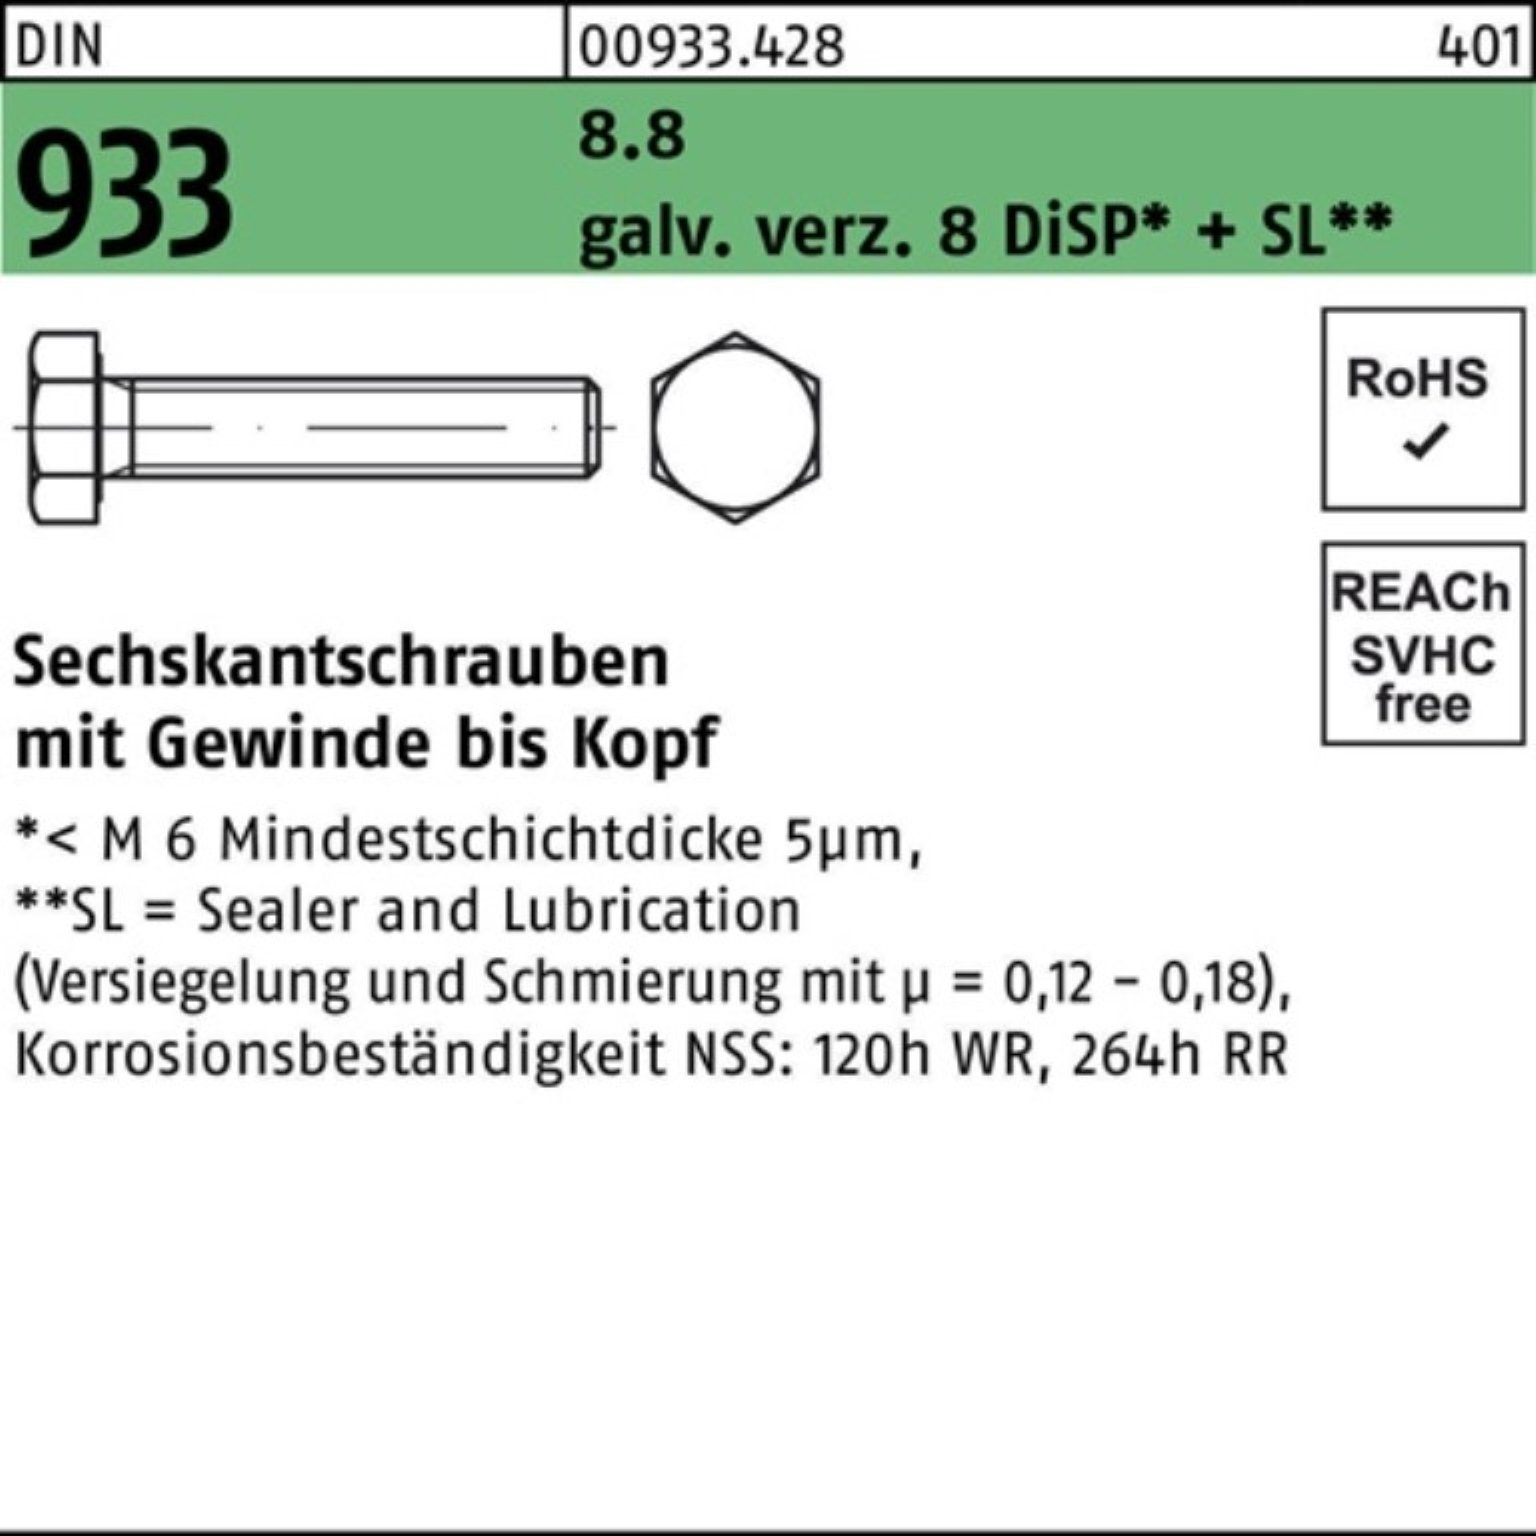 Sechskantschraube 55 SL Sechskantschraube VG Zn Pack 8.8 DiSP 200er DIN 8 M8x gal 933 Reyher +